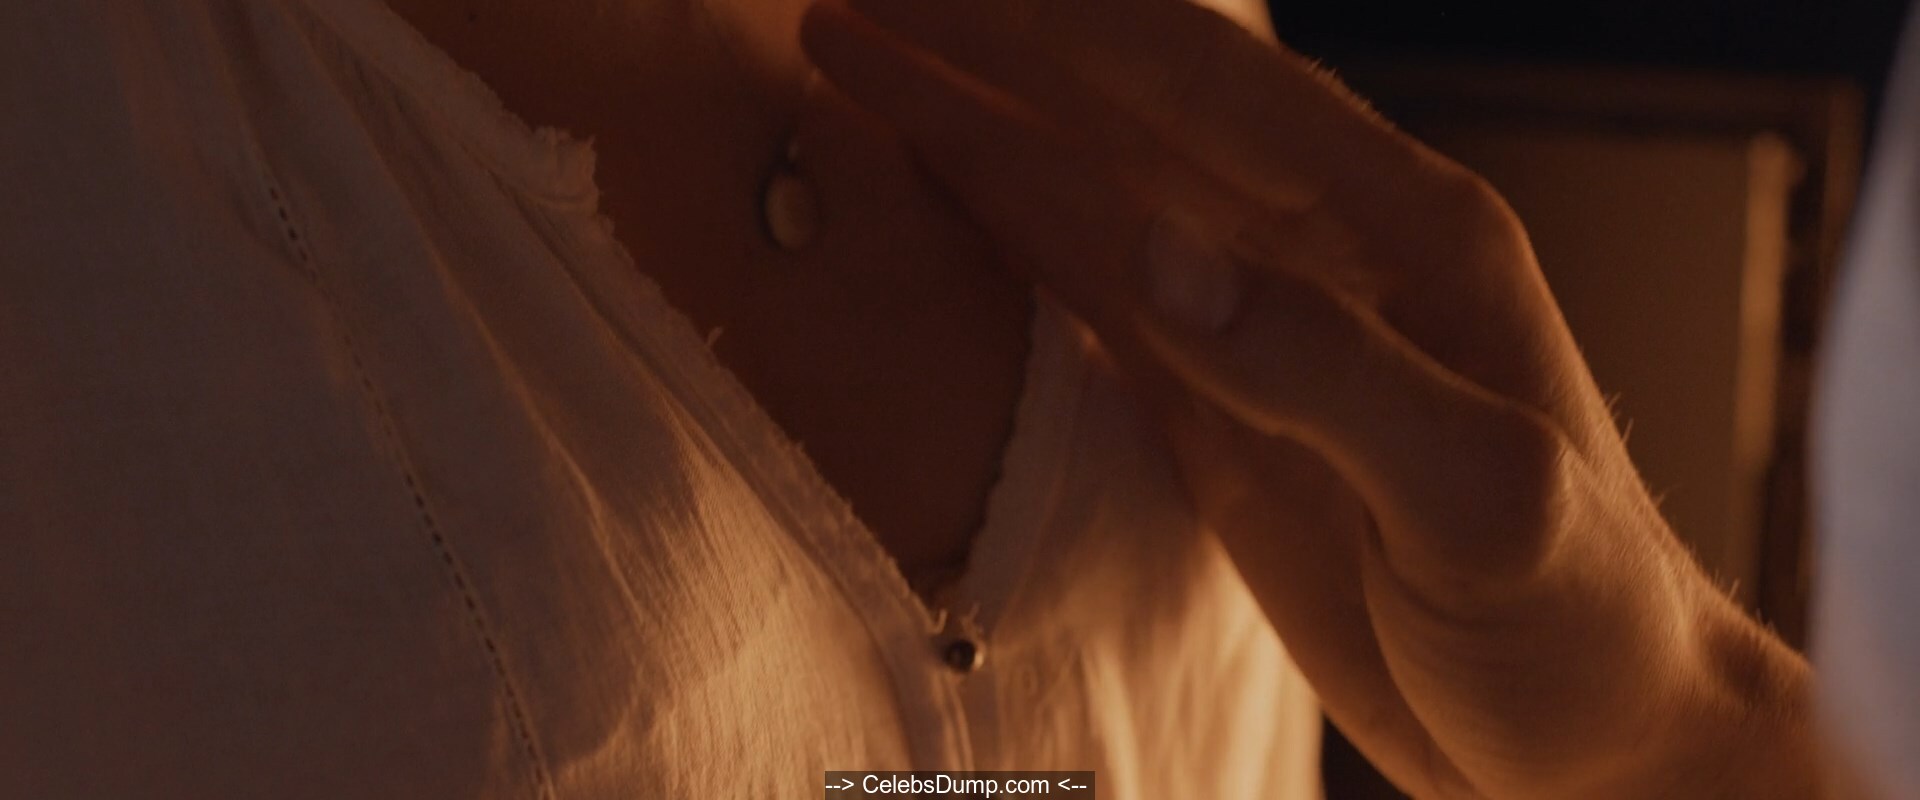 Dutch actress Loes Haverkort nude at Rendez-Vous (2015) .